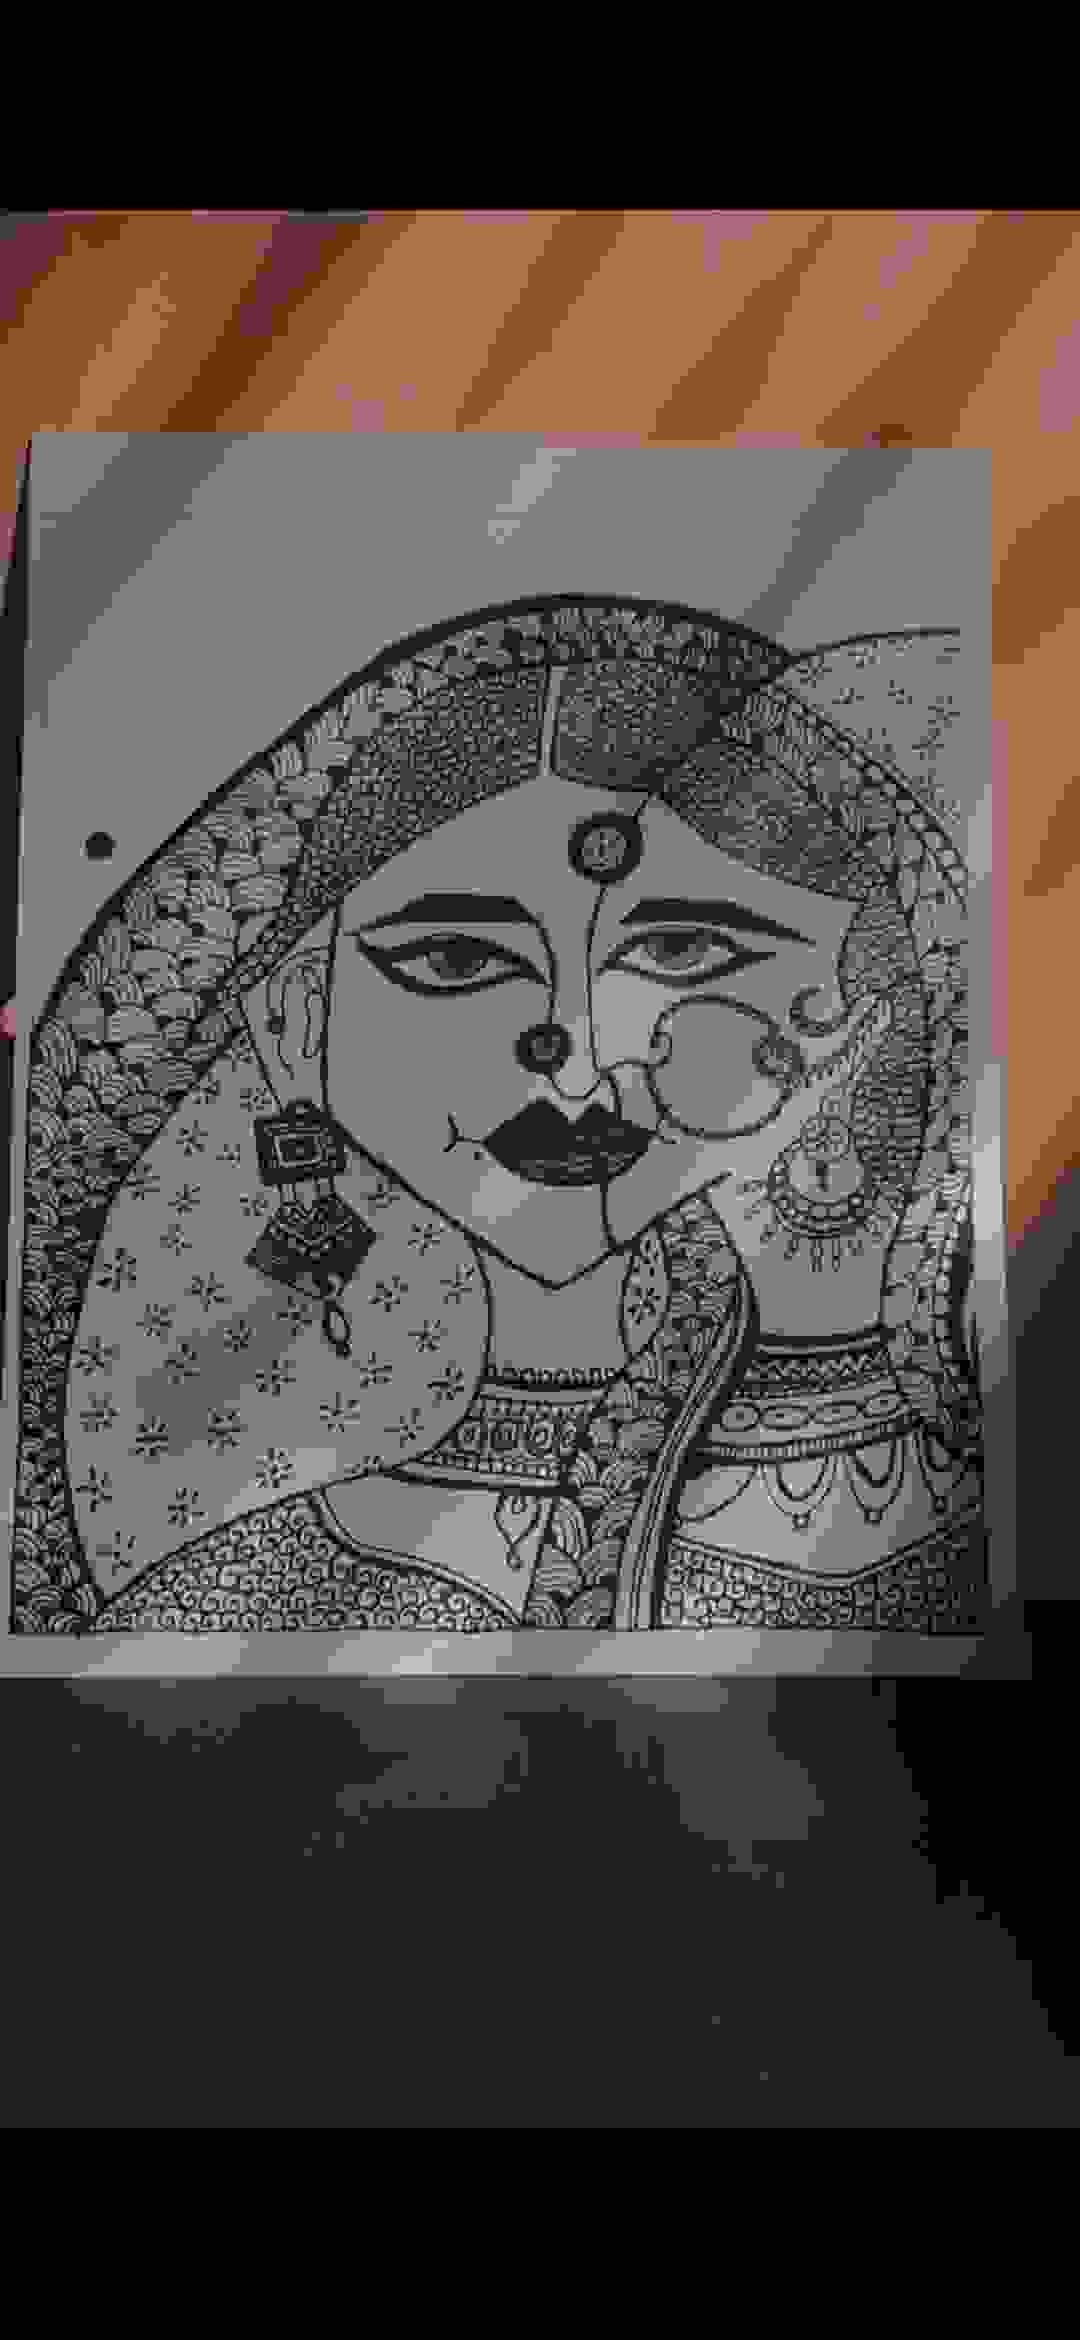 Graceful Charm: Charcoal Portrait Print of a Rajasthani Woman Holding